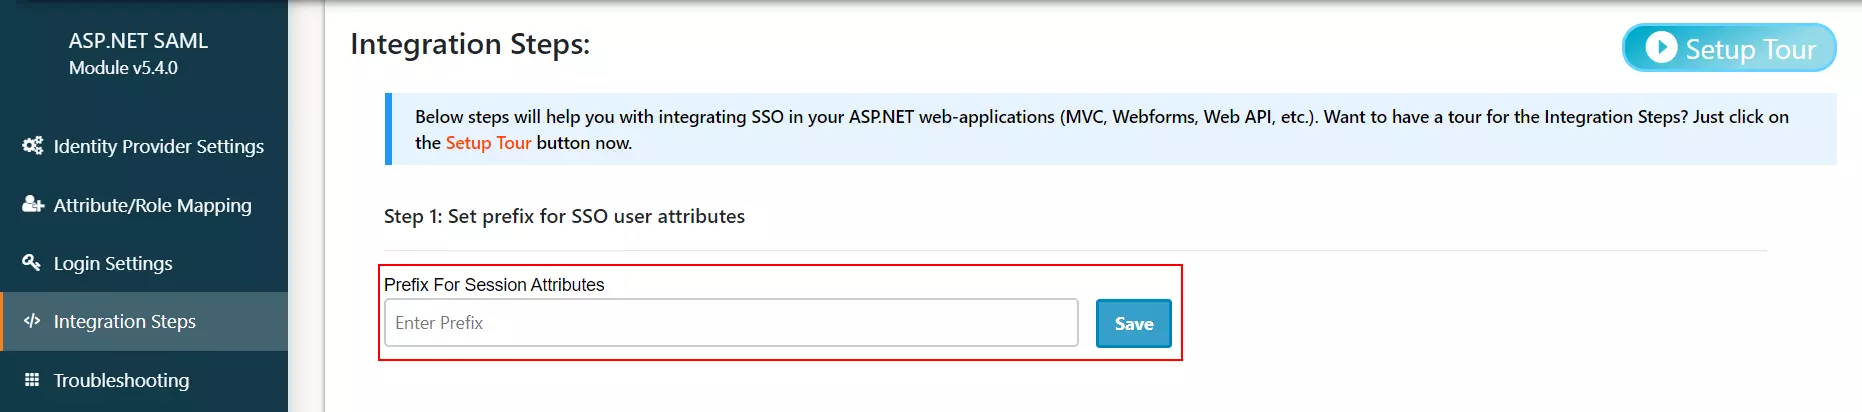 ASP.NET SAML Single Sign-On (SSO) using Salesforce Community as IDP - Prefix SSO Attributes